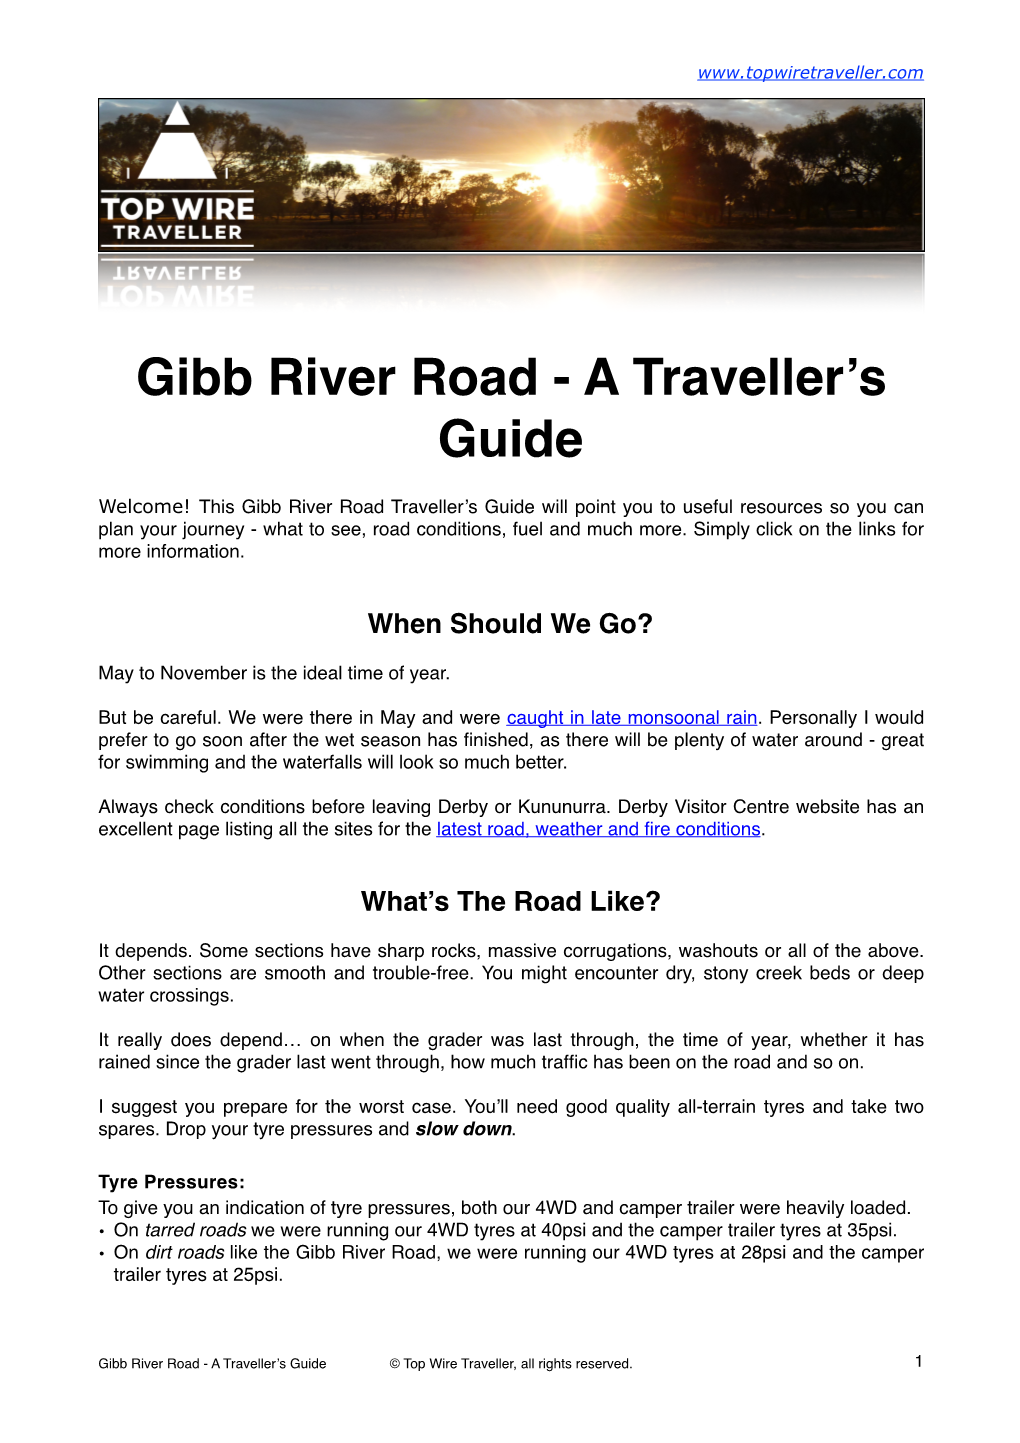 Gibb River Road - a Traveller’S Guide